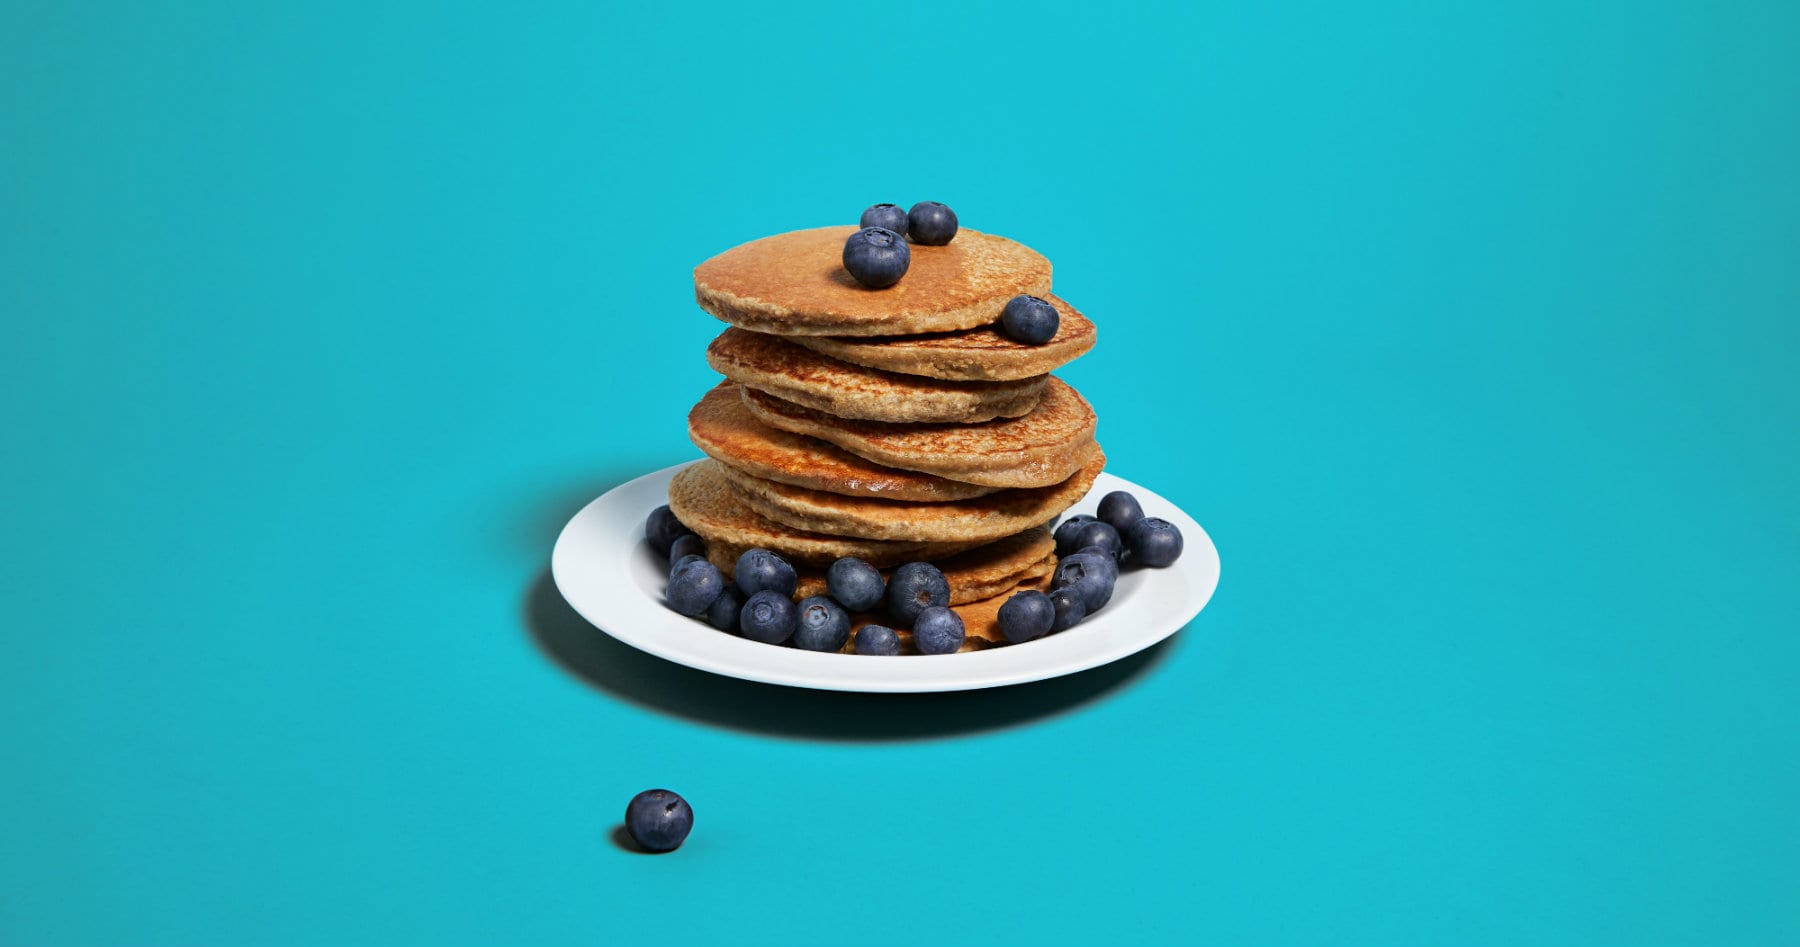 4-Ingredient Foolproof Banana Protein Pancakes (& 5 More Protein Pancake Recipes)